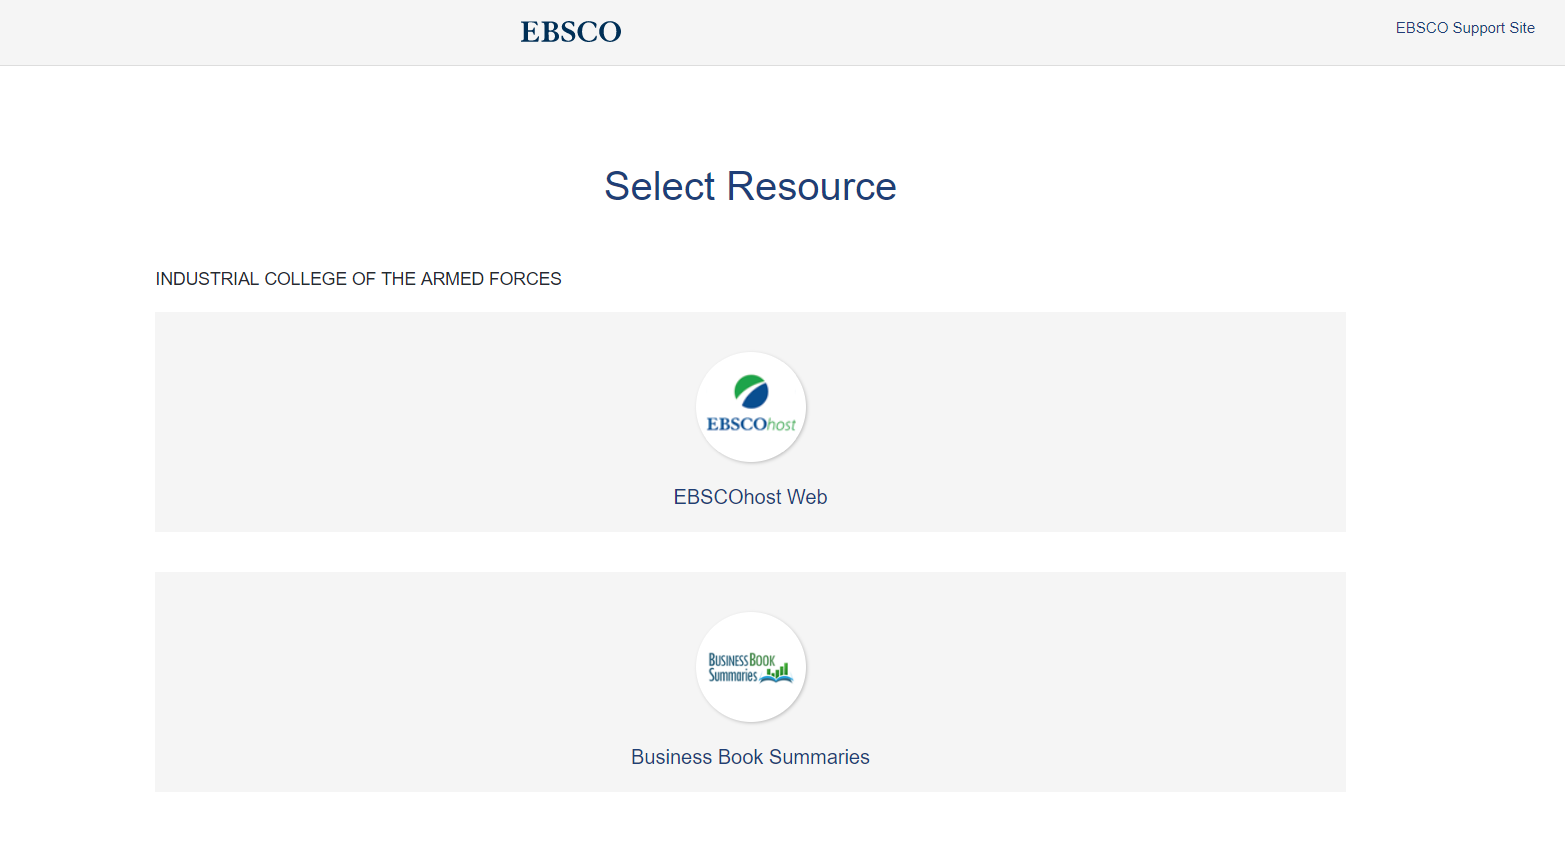 EBSCO log in screen